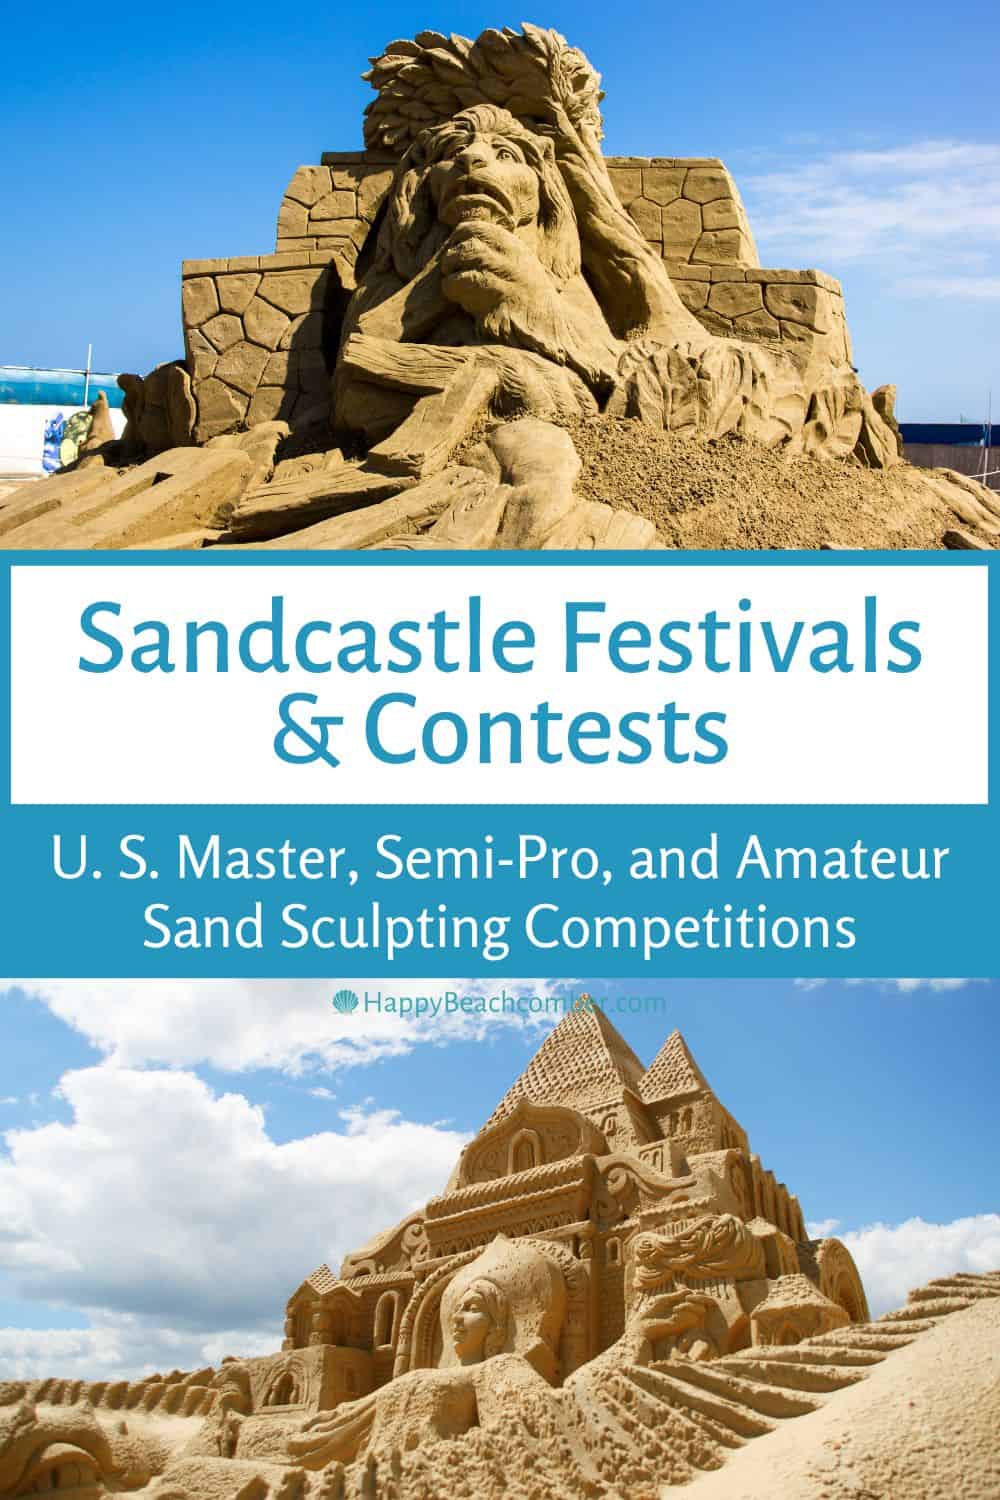 Sandcastle Festivals & Contests